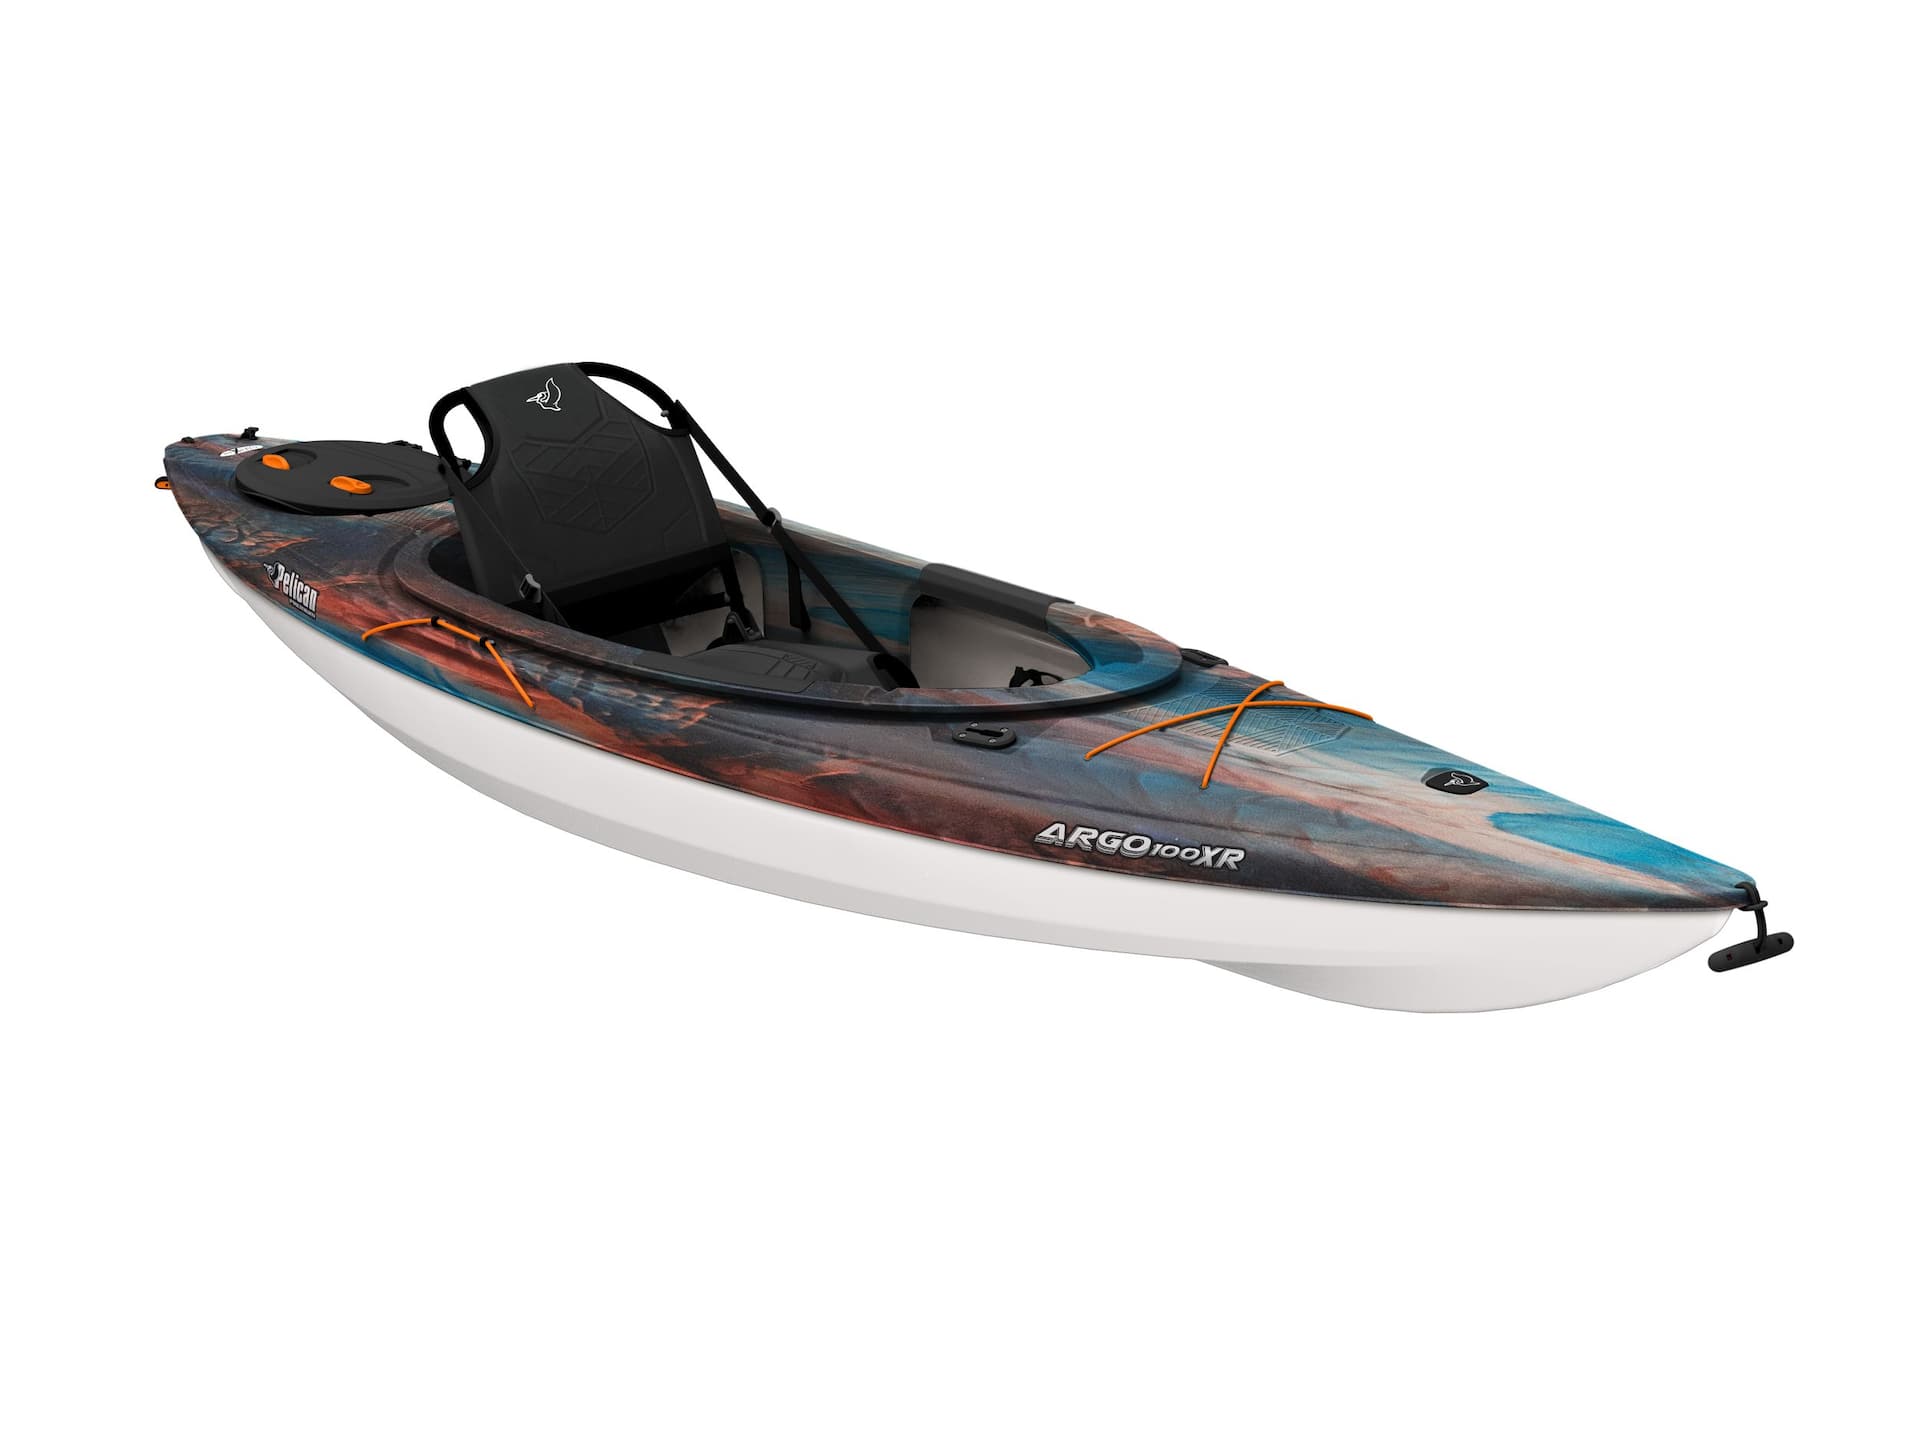 Pelican Argo 100 Recreational 1-Person Kayak, Cosmos/White, 10-ft